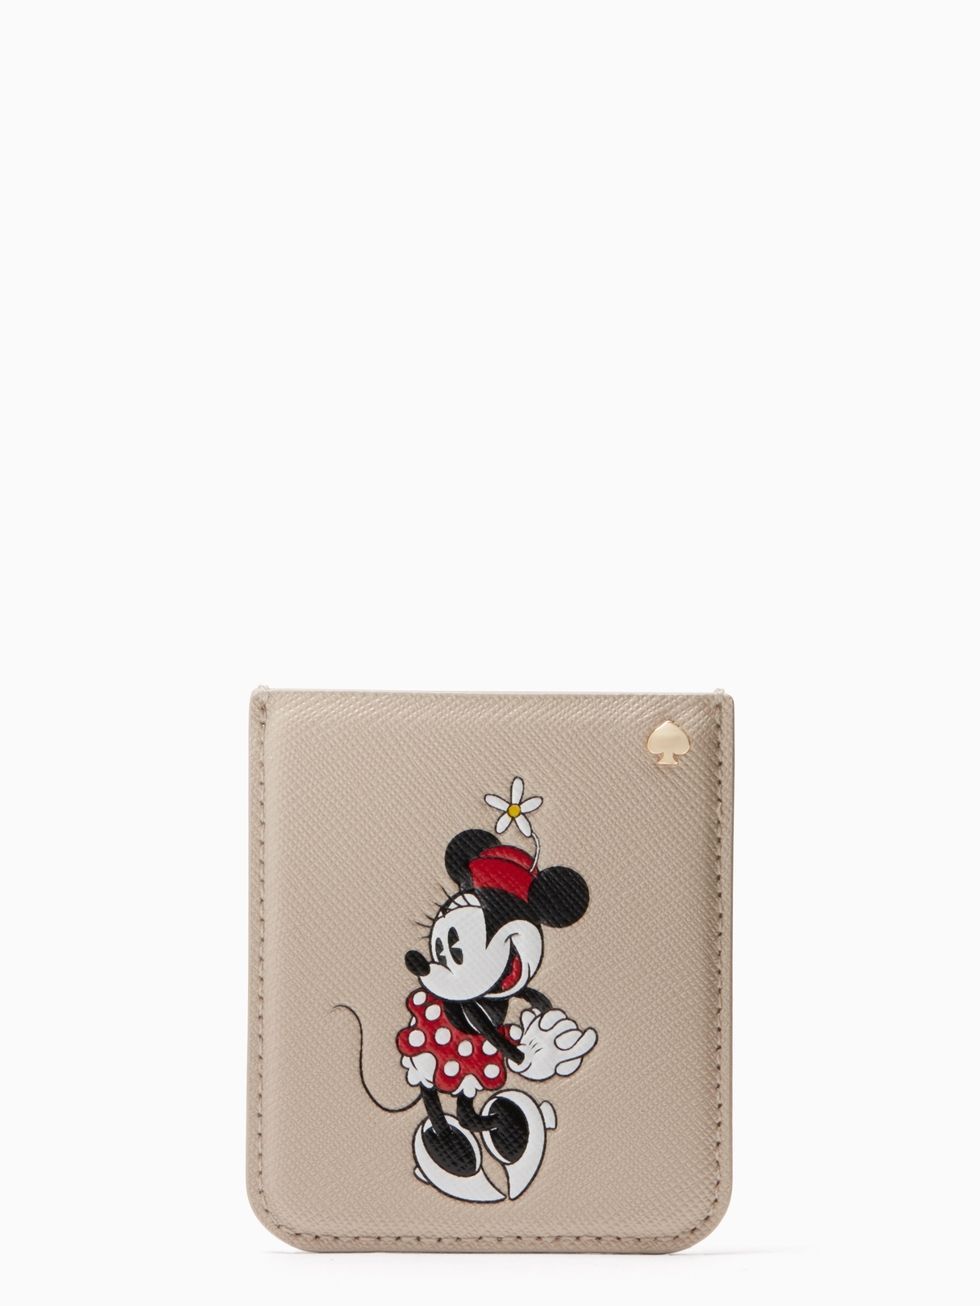 Disney X Kate Spade New York Minnie Mouse Backpack | Kate Spade Outlet |  Mochilas de stitch, Mochilas mujer, Mochilas